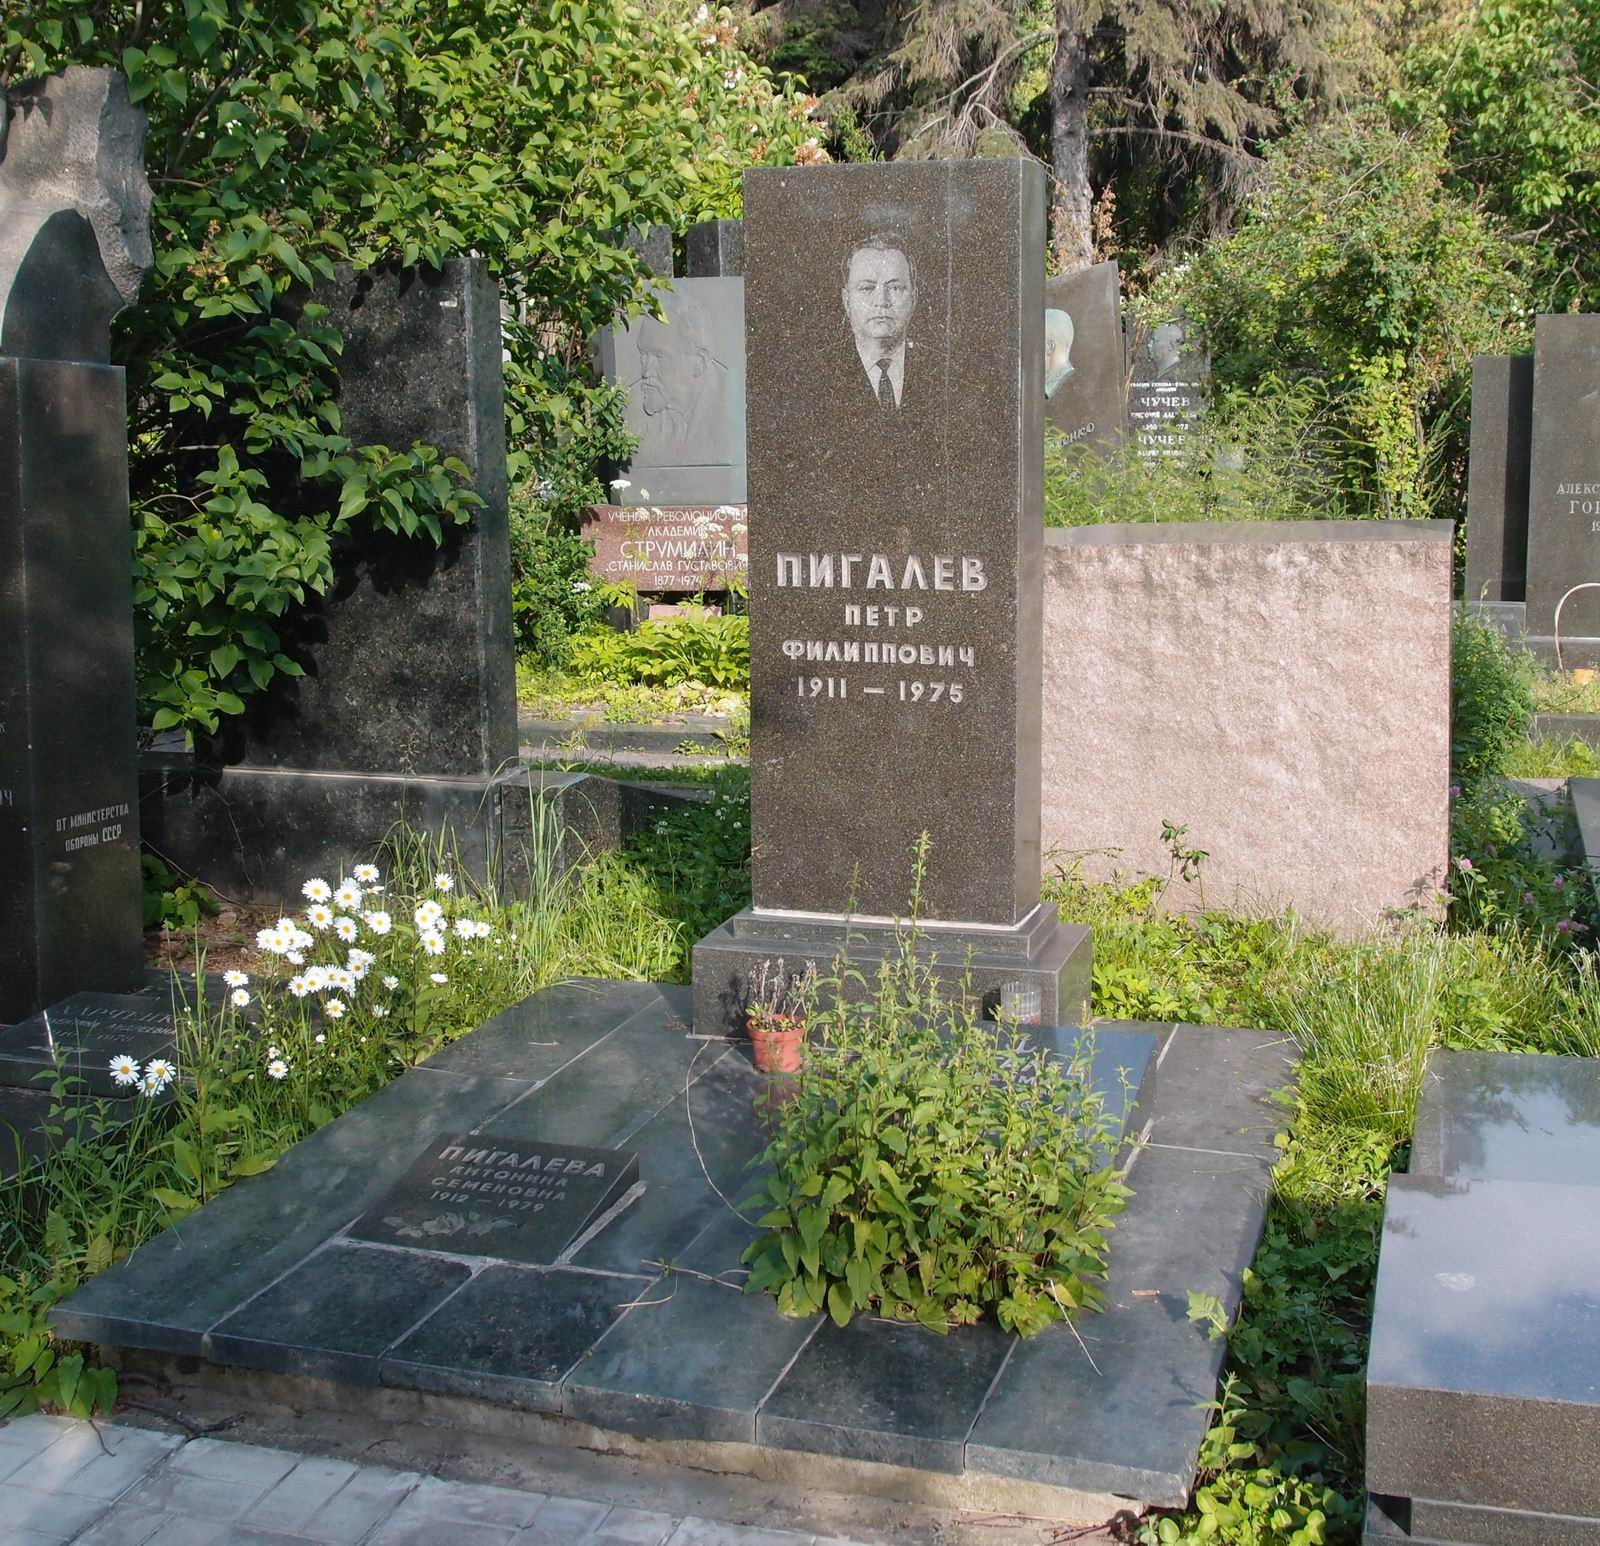 Памятник на могиле Пигалева П.Ф. (1911-1975), автор В.Пигалев, на Новодевичьем кладбище (7-10-22).